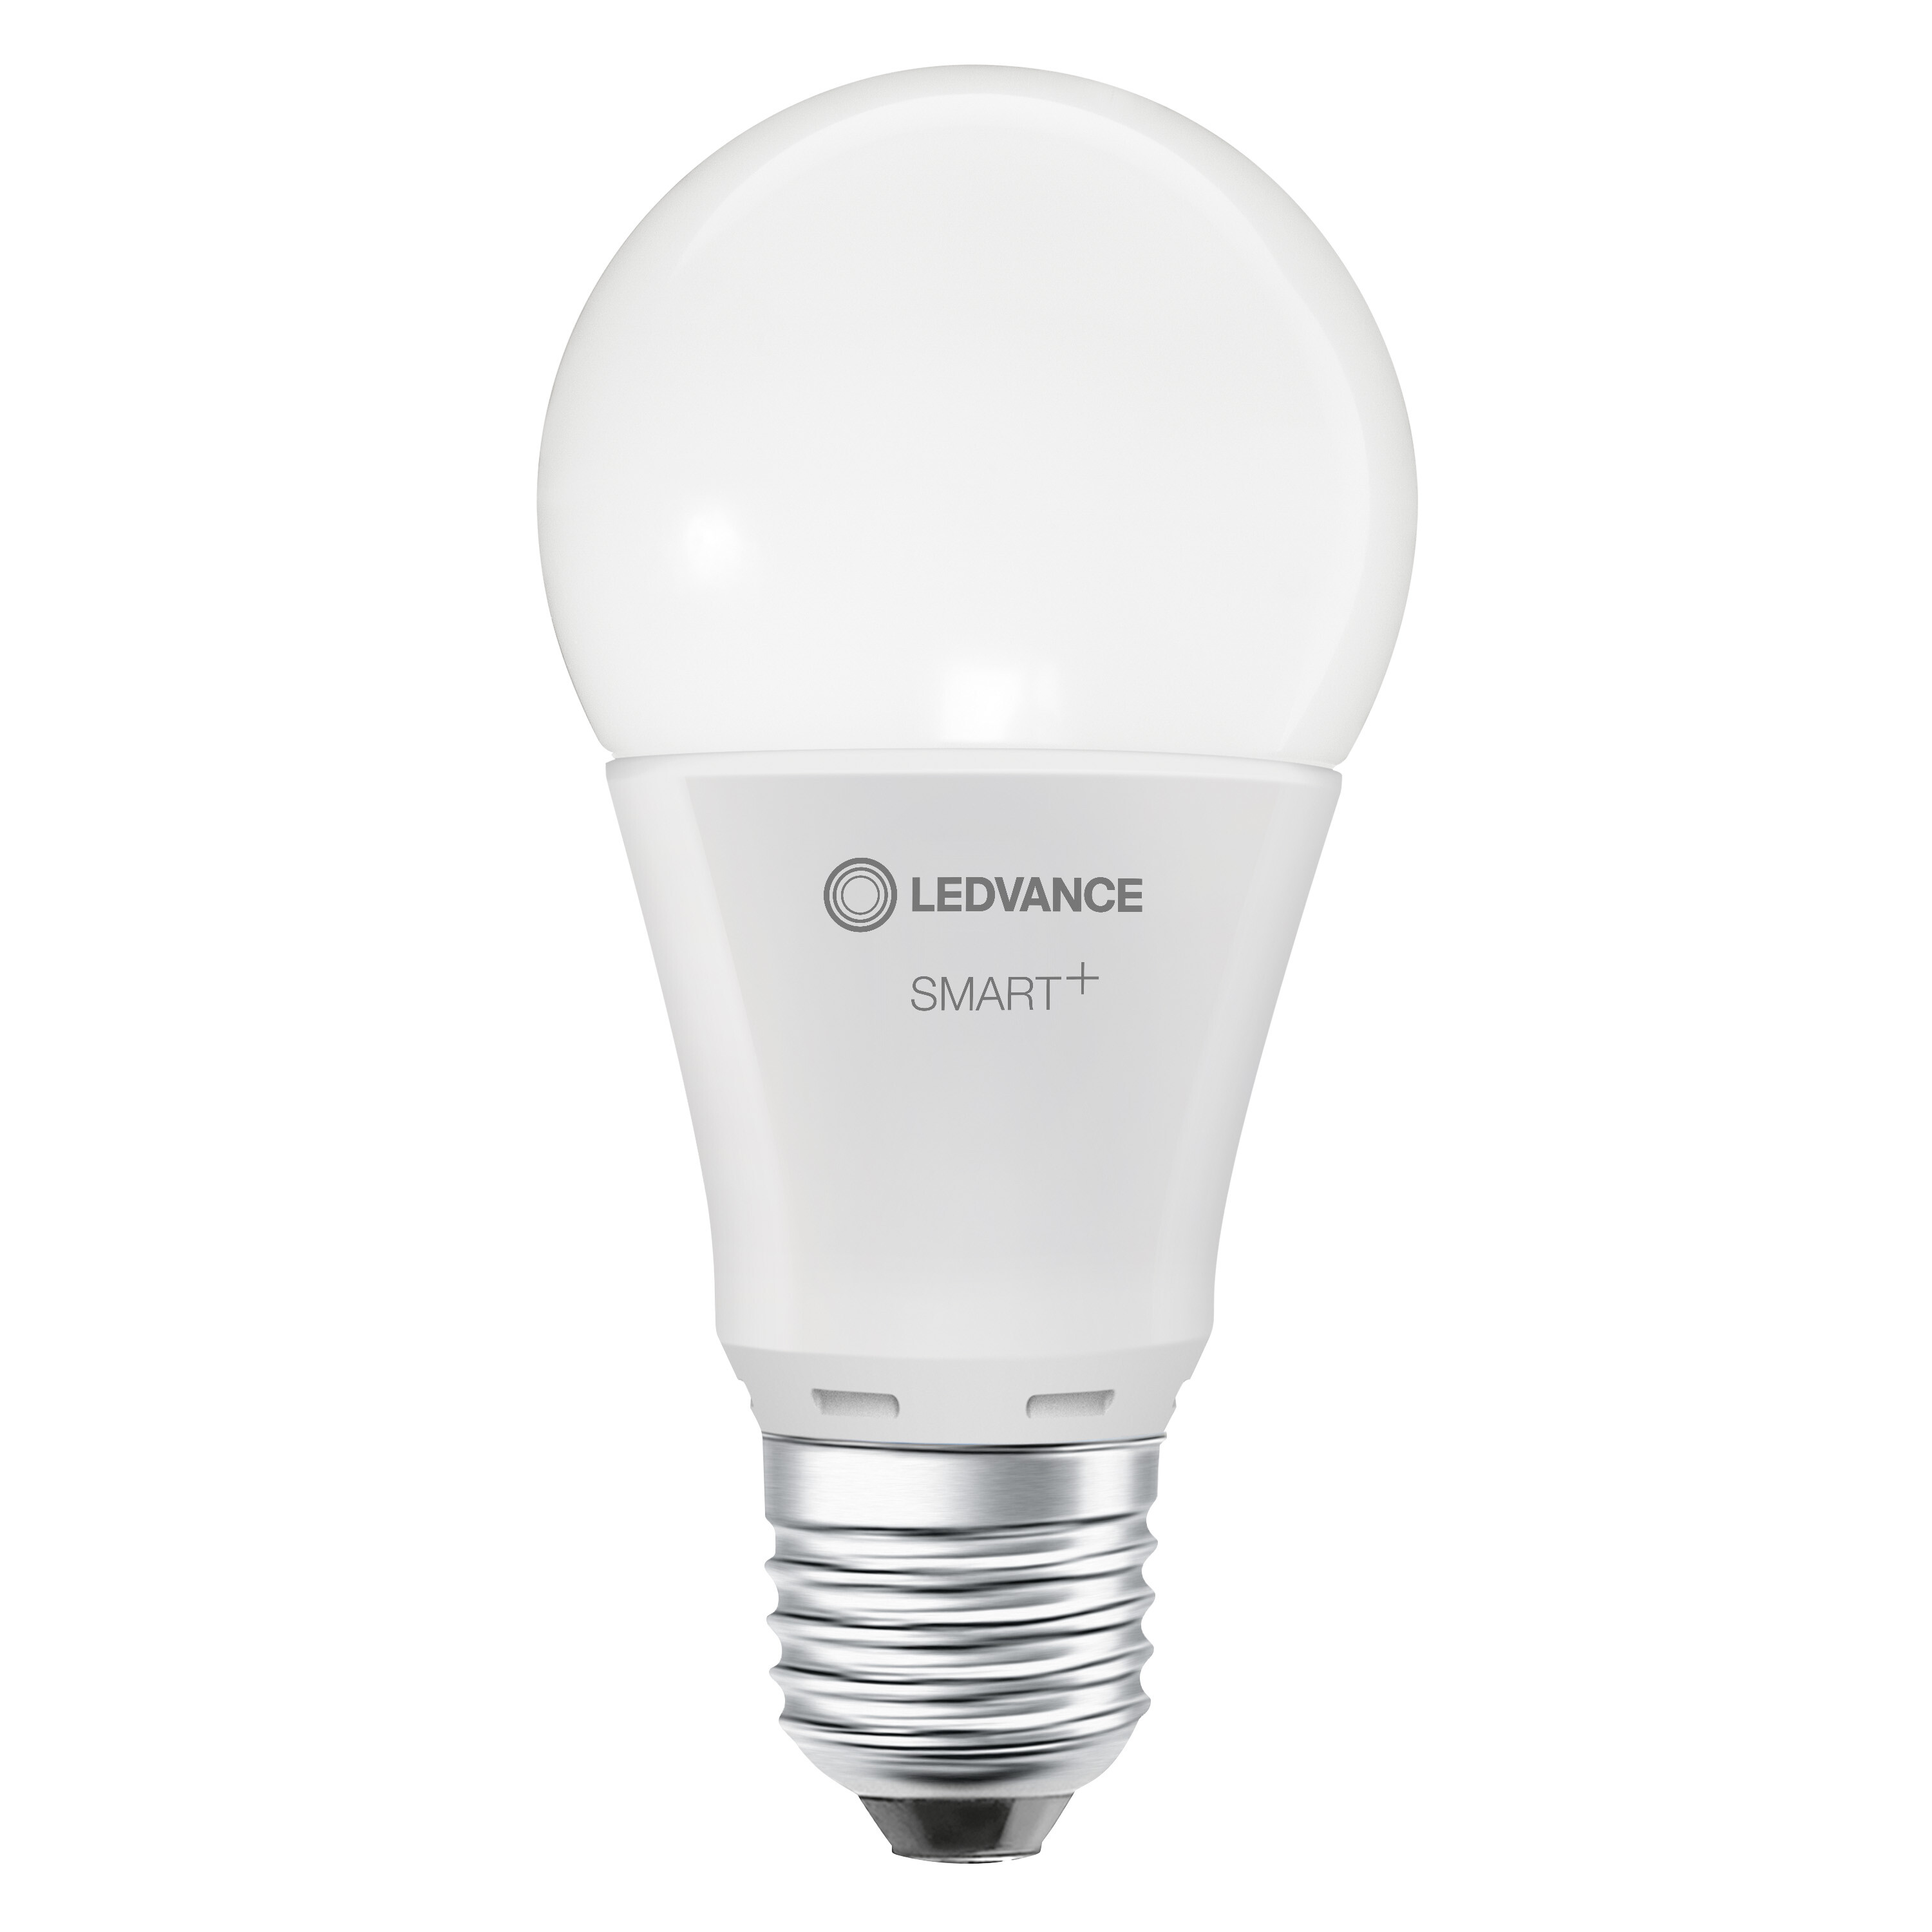 LEDVANCE SMART+ Lampe Smarte LED Classic Warmweiß Dimmable